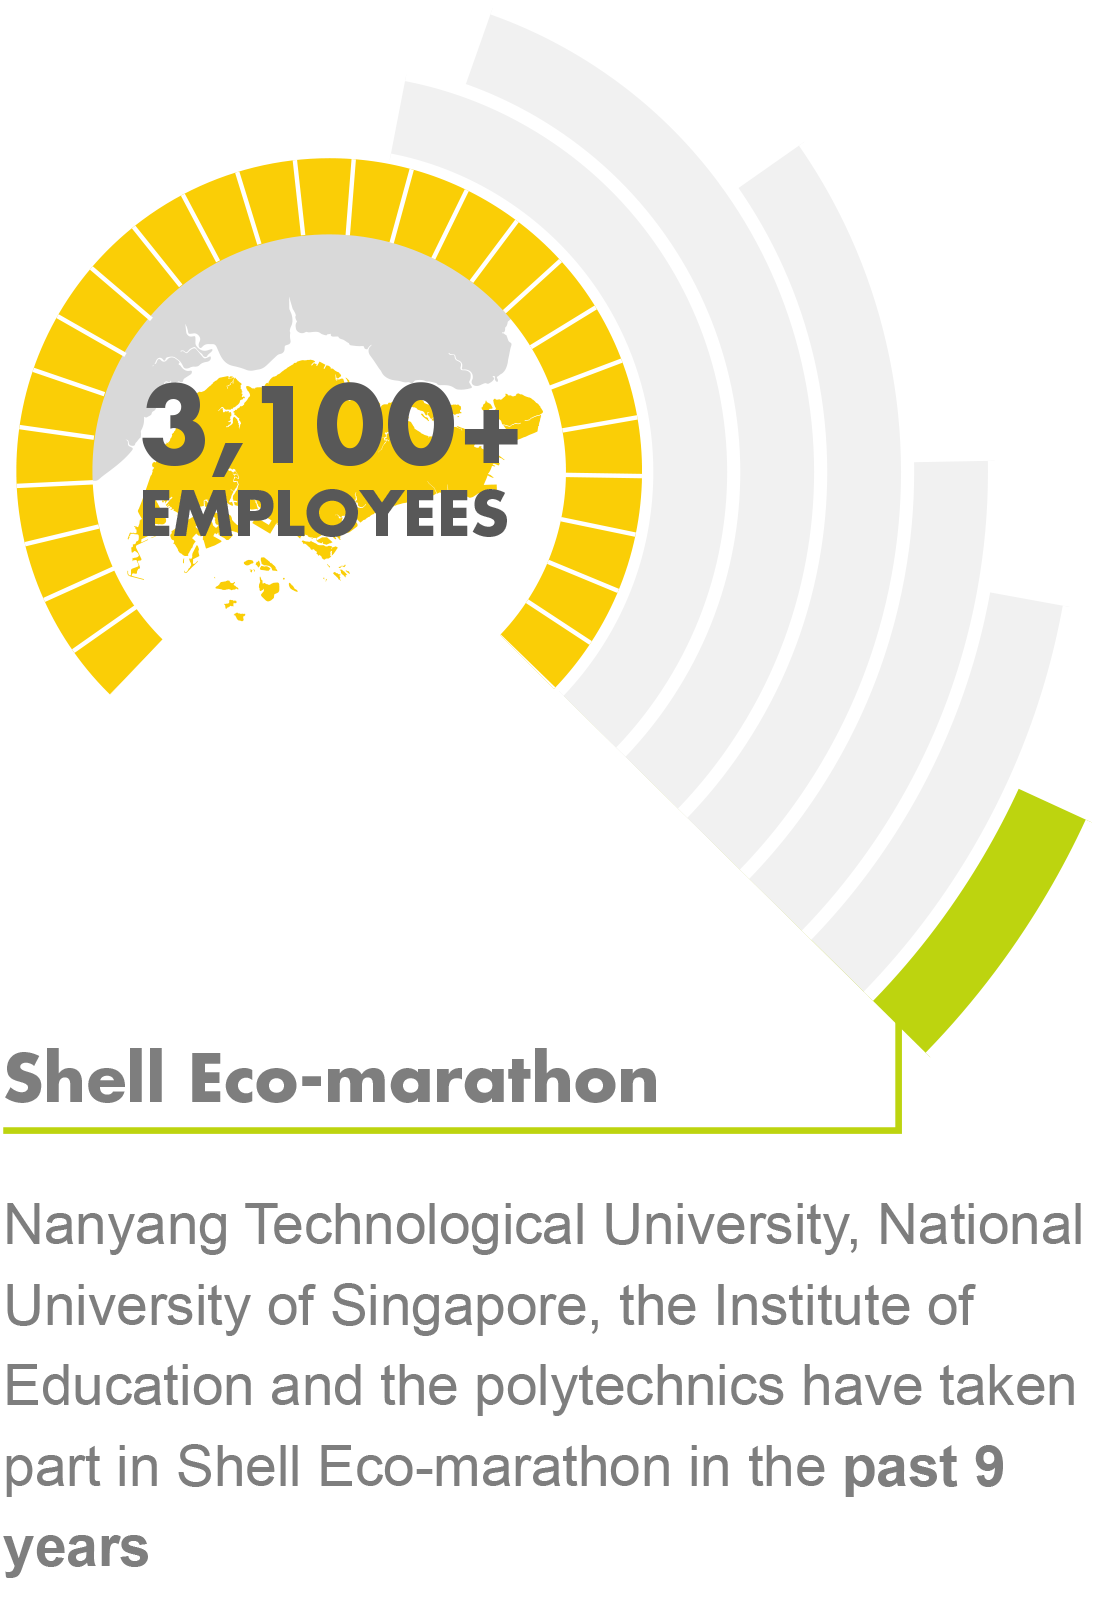 Shell Eco-Marathong - Nanyang Technological University, National University of Singapre, the Institute of Education and the polytechnics have taken part in SHell Eco-marathon in the past 9 years